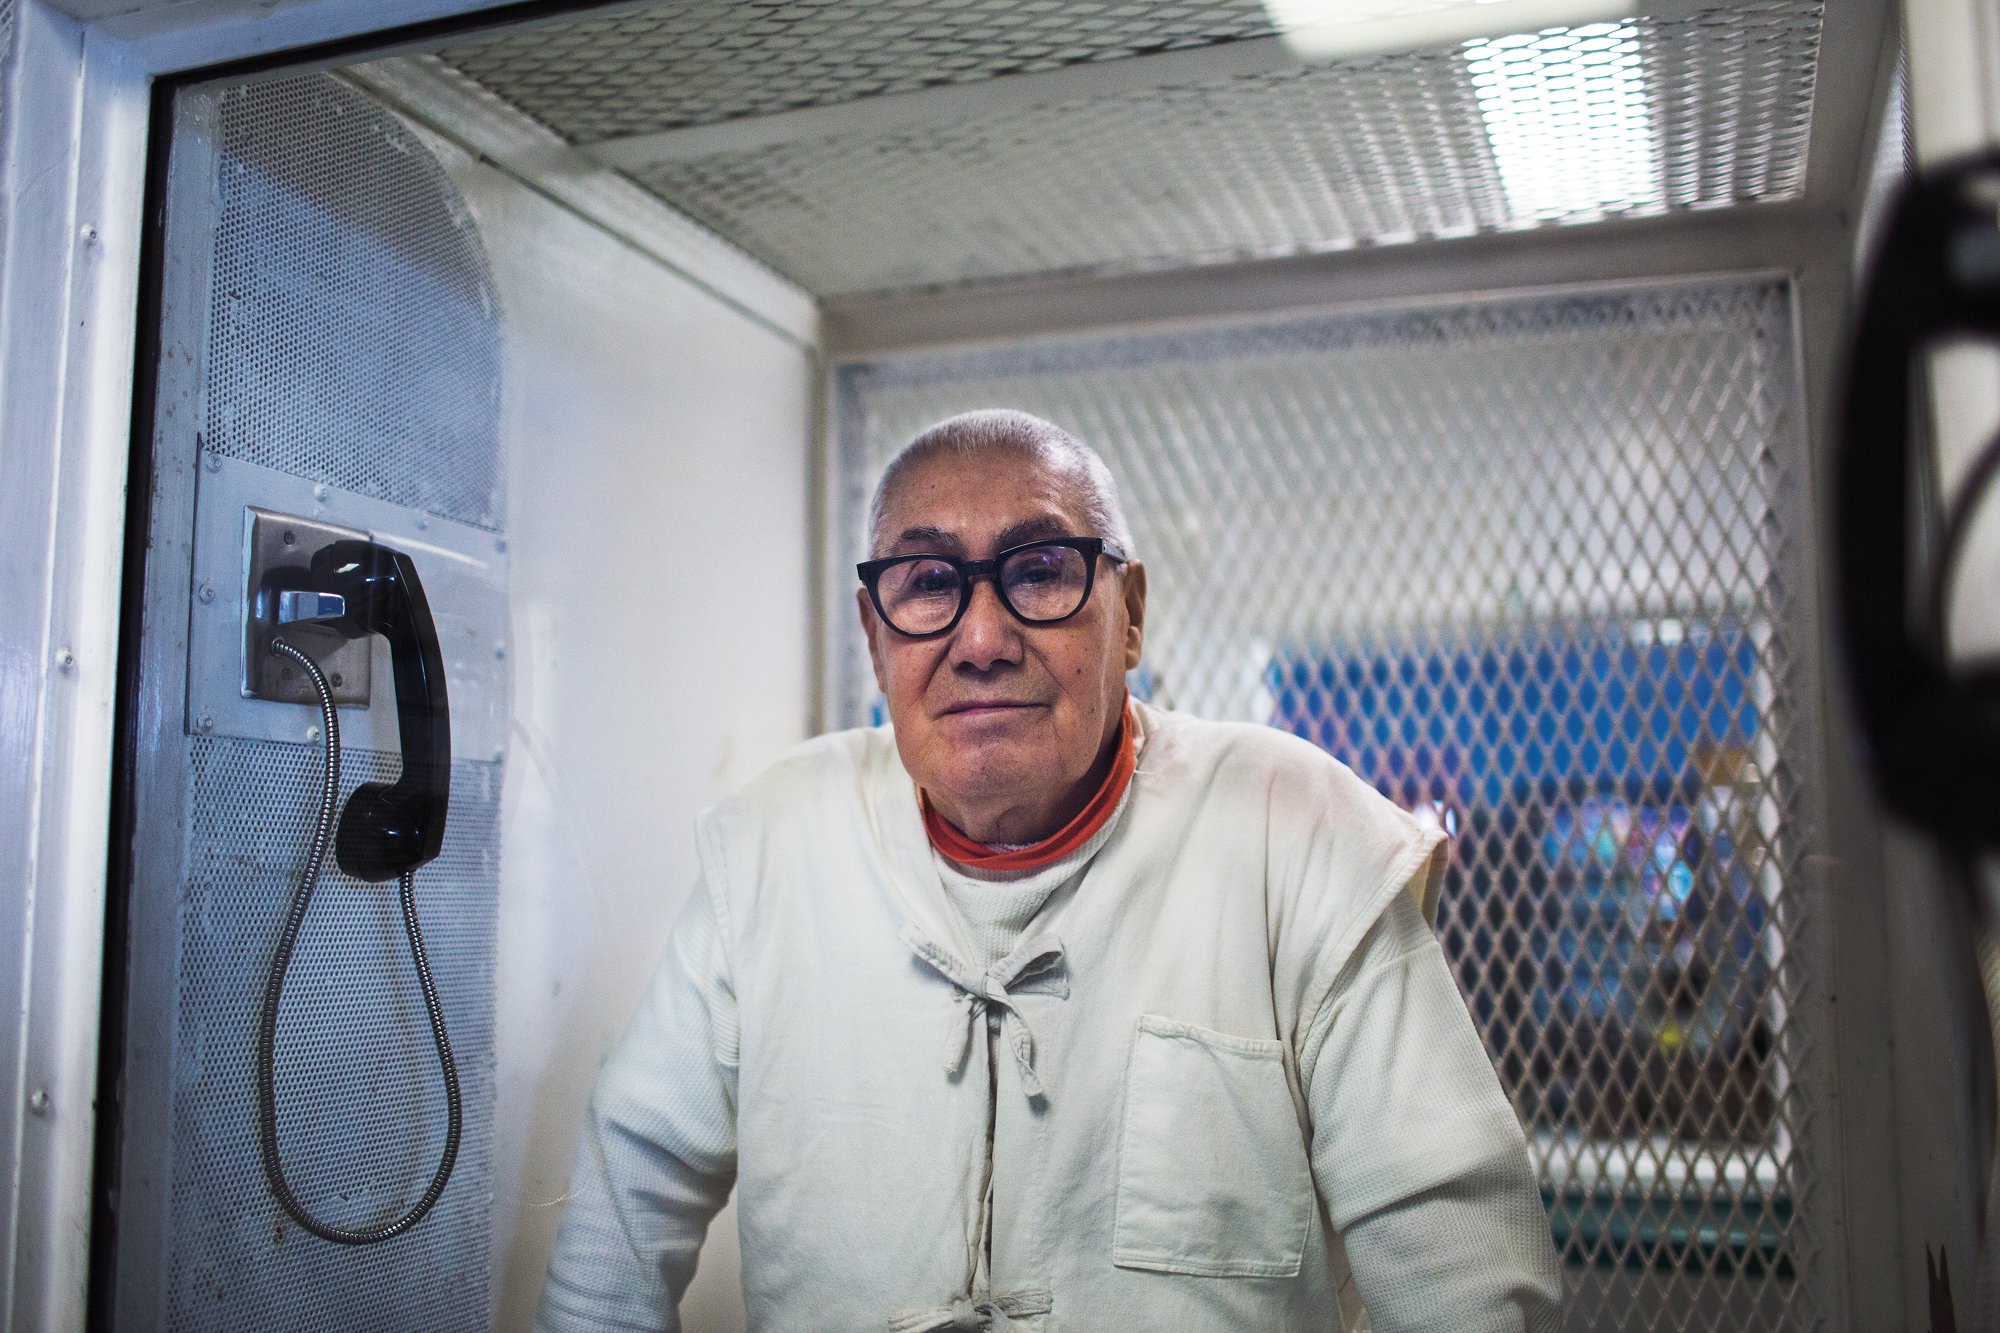 Benito Alonzo, inmate at the Polunsky Unit